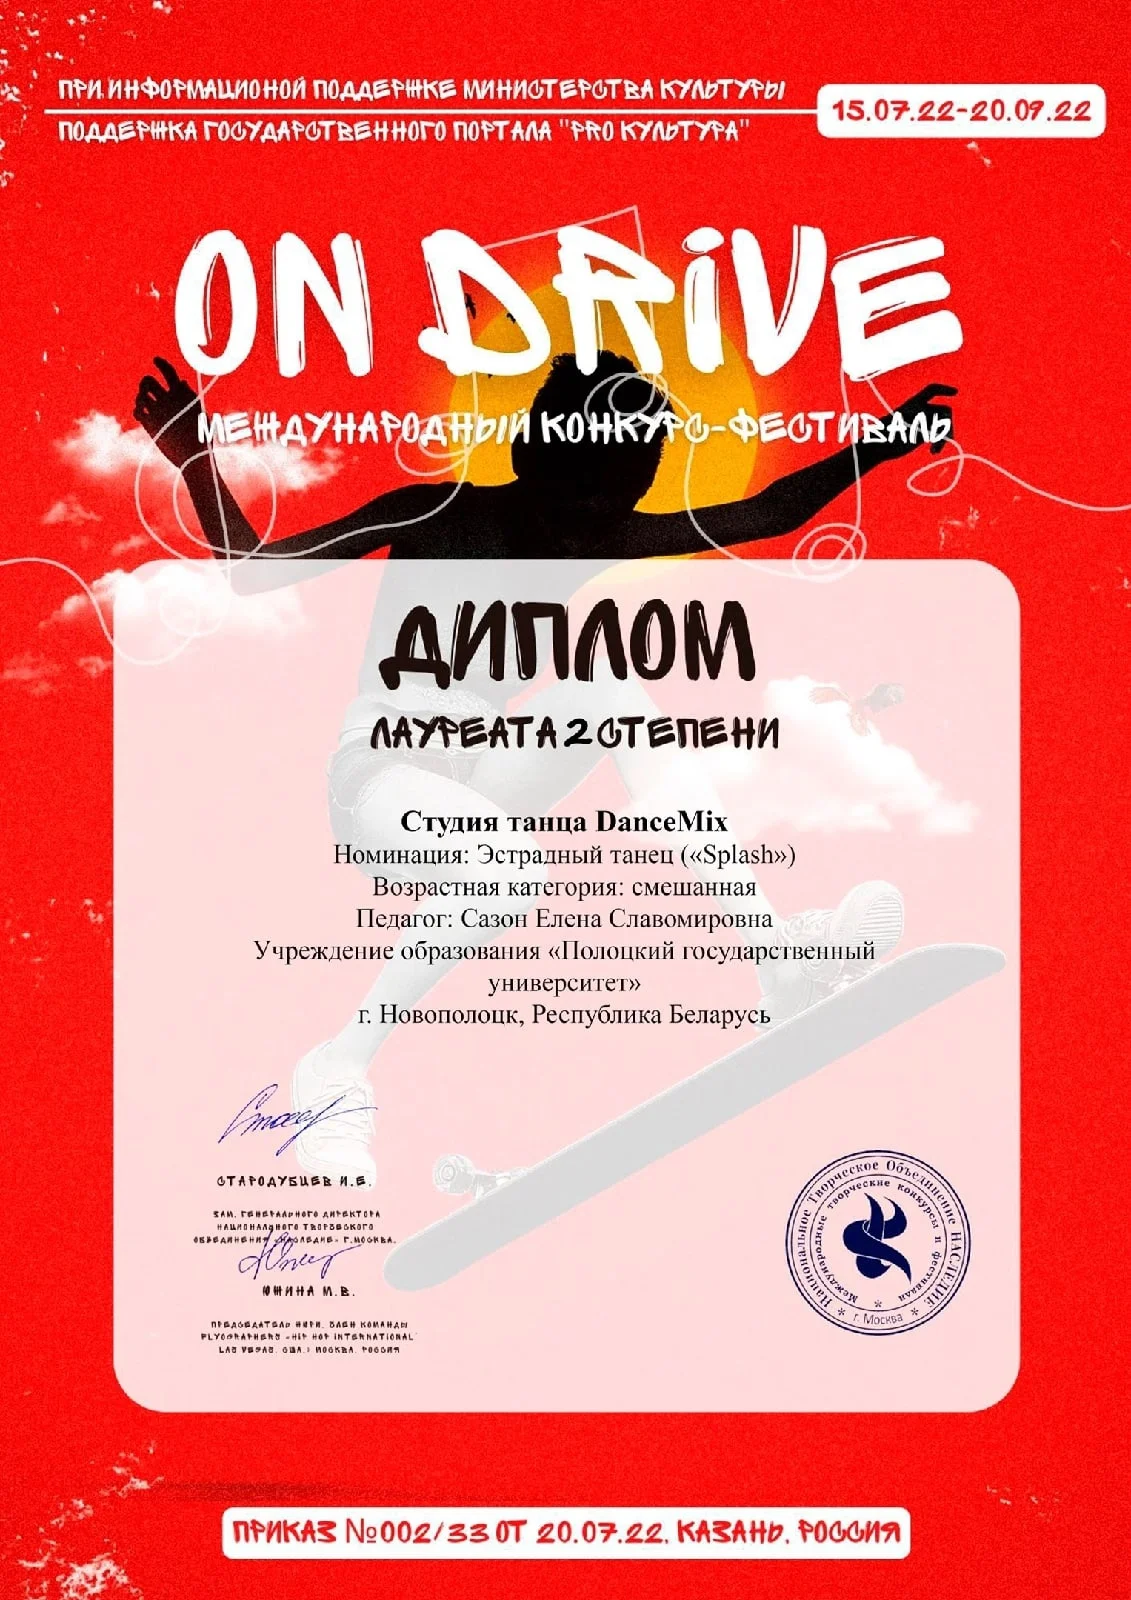 Международный конкурс-фестиваль «On drive»